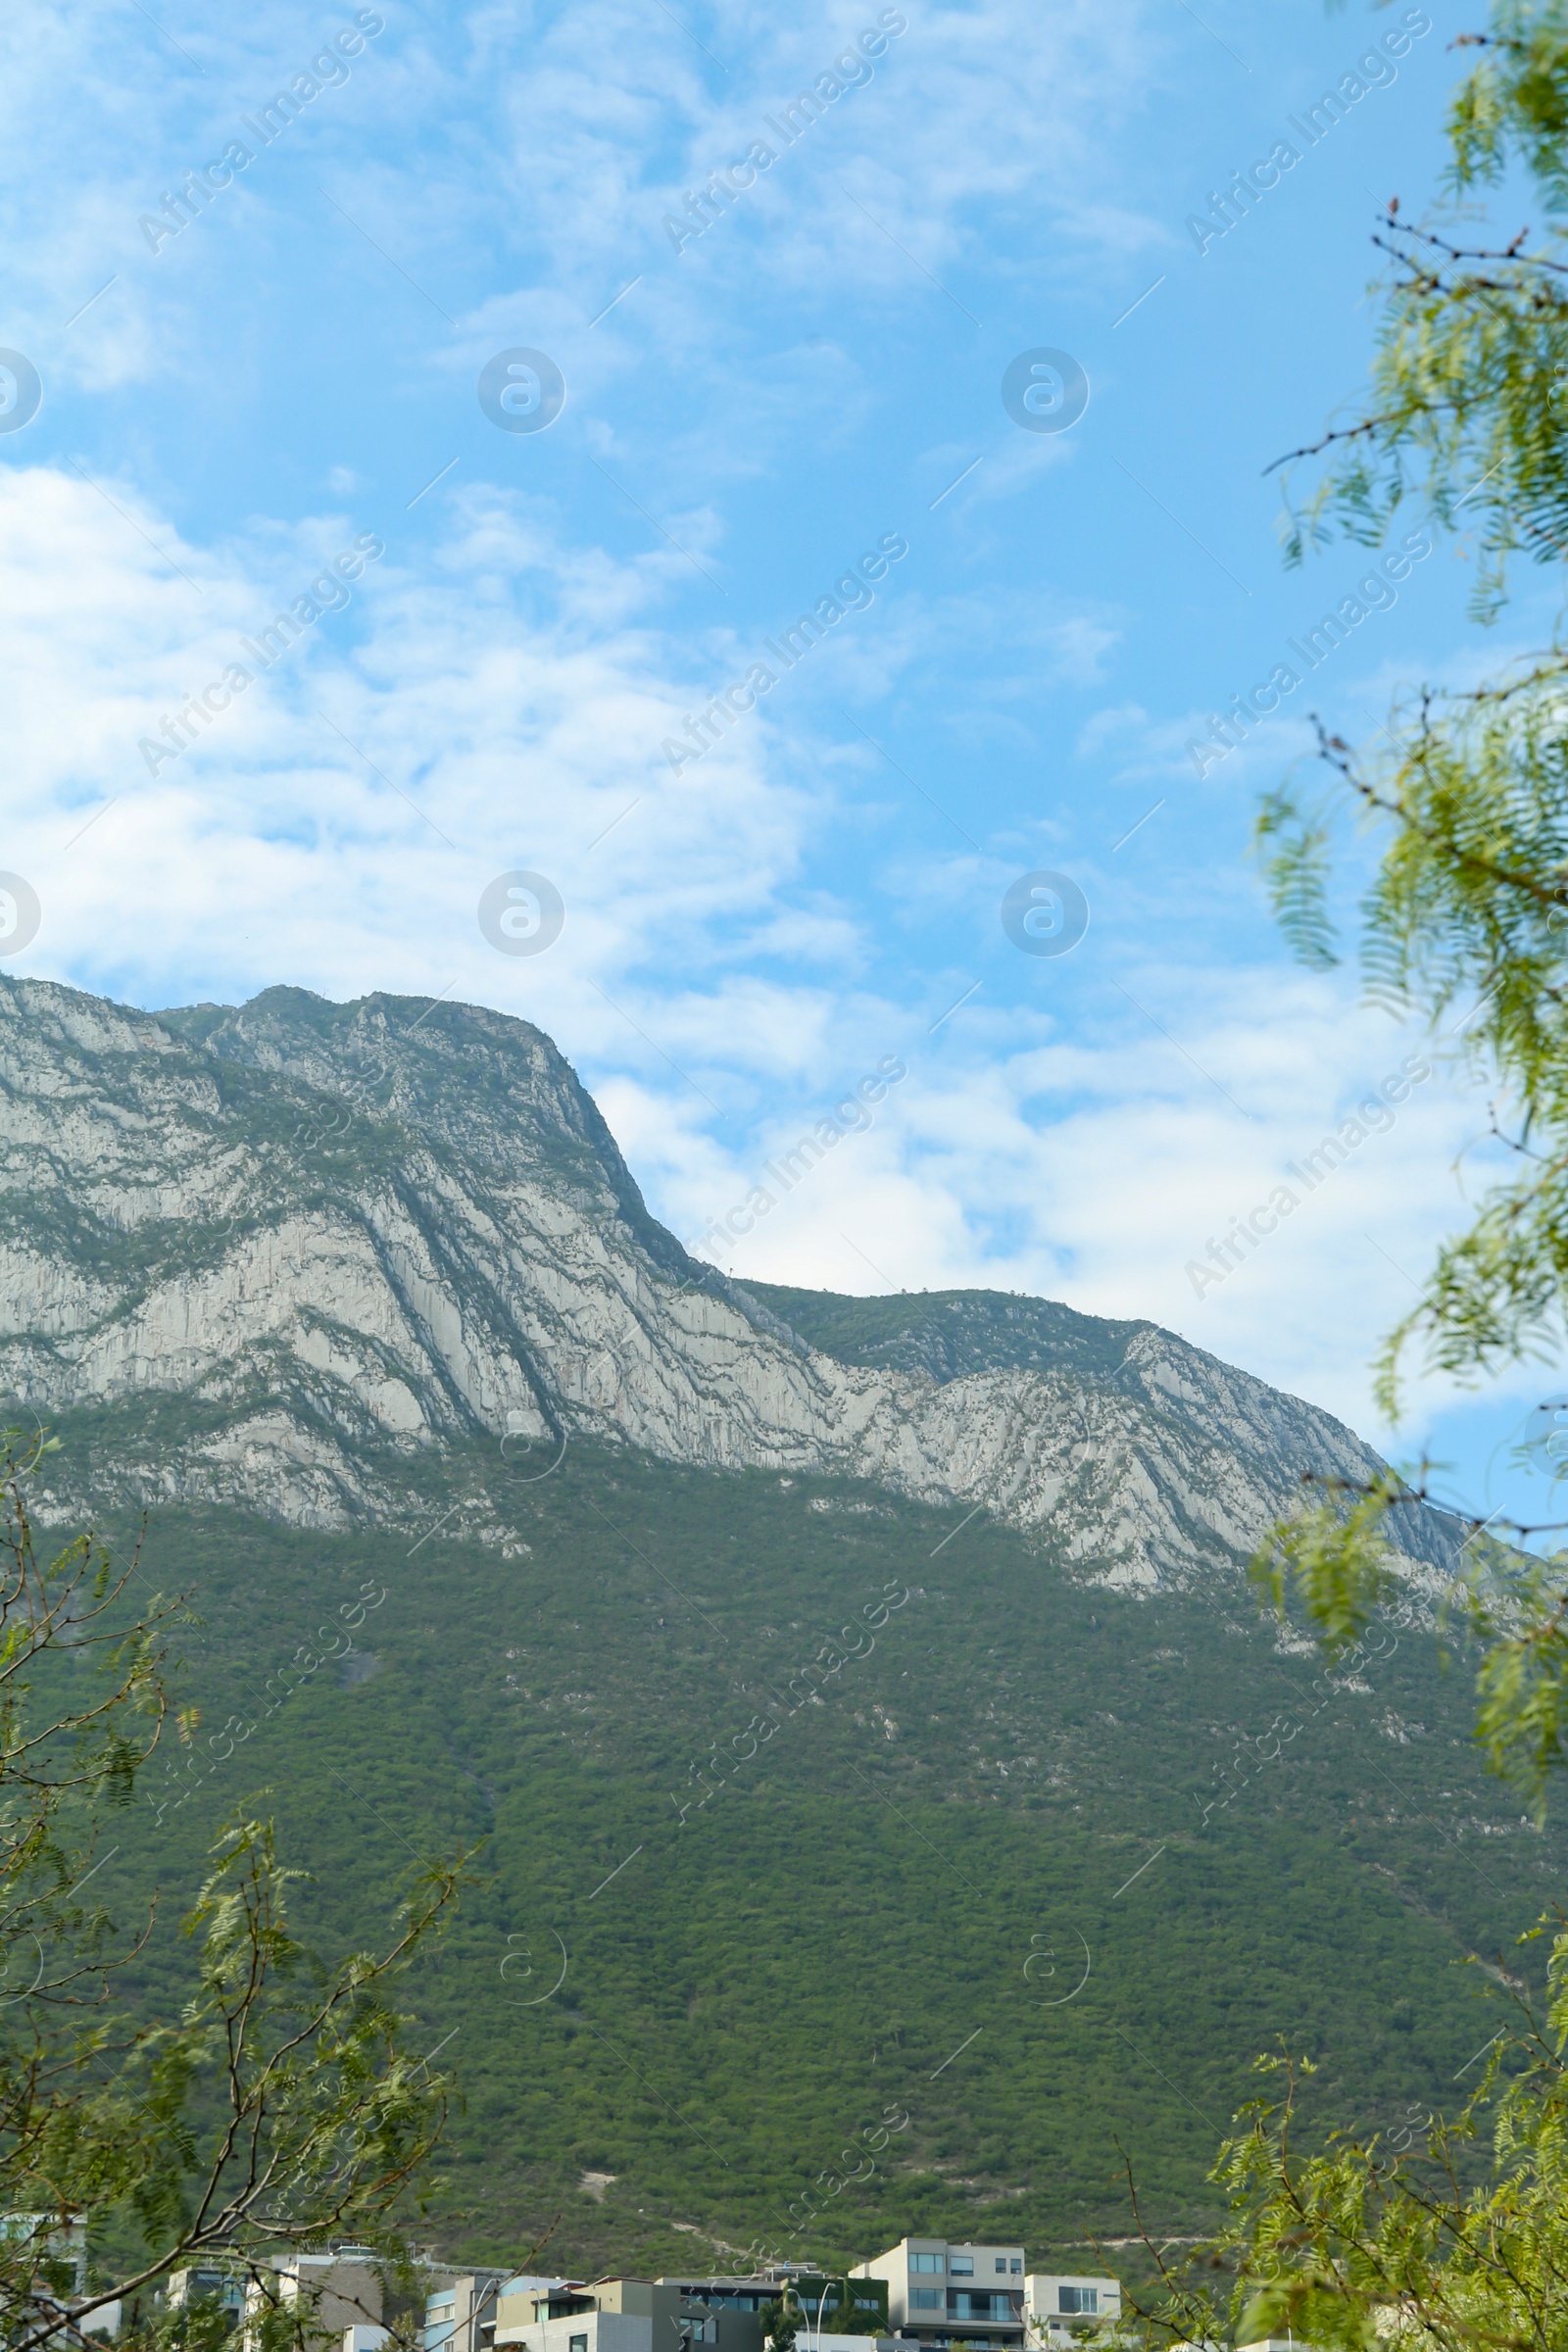 Photo of Town near beautiful mountain landscape under blue sky